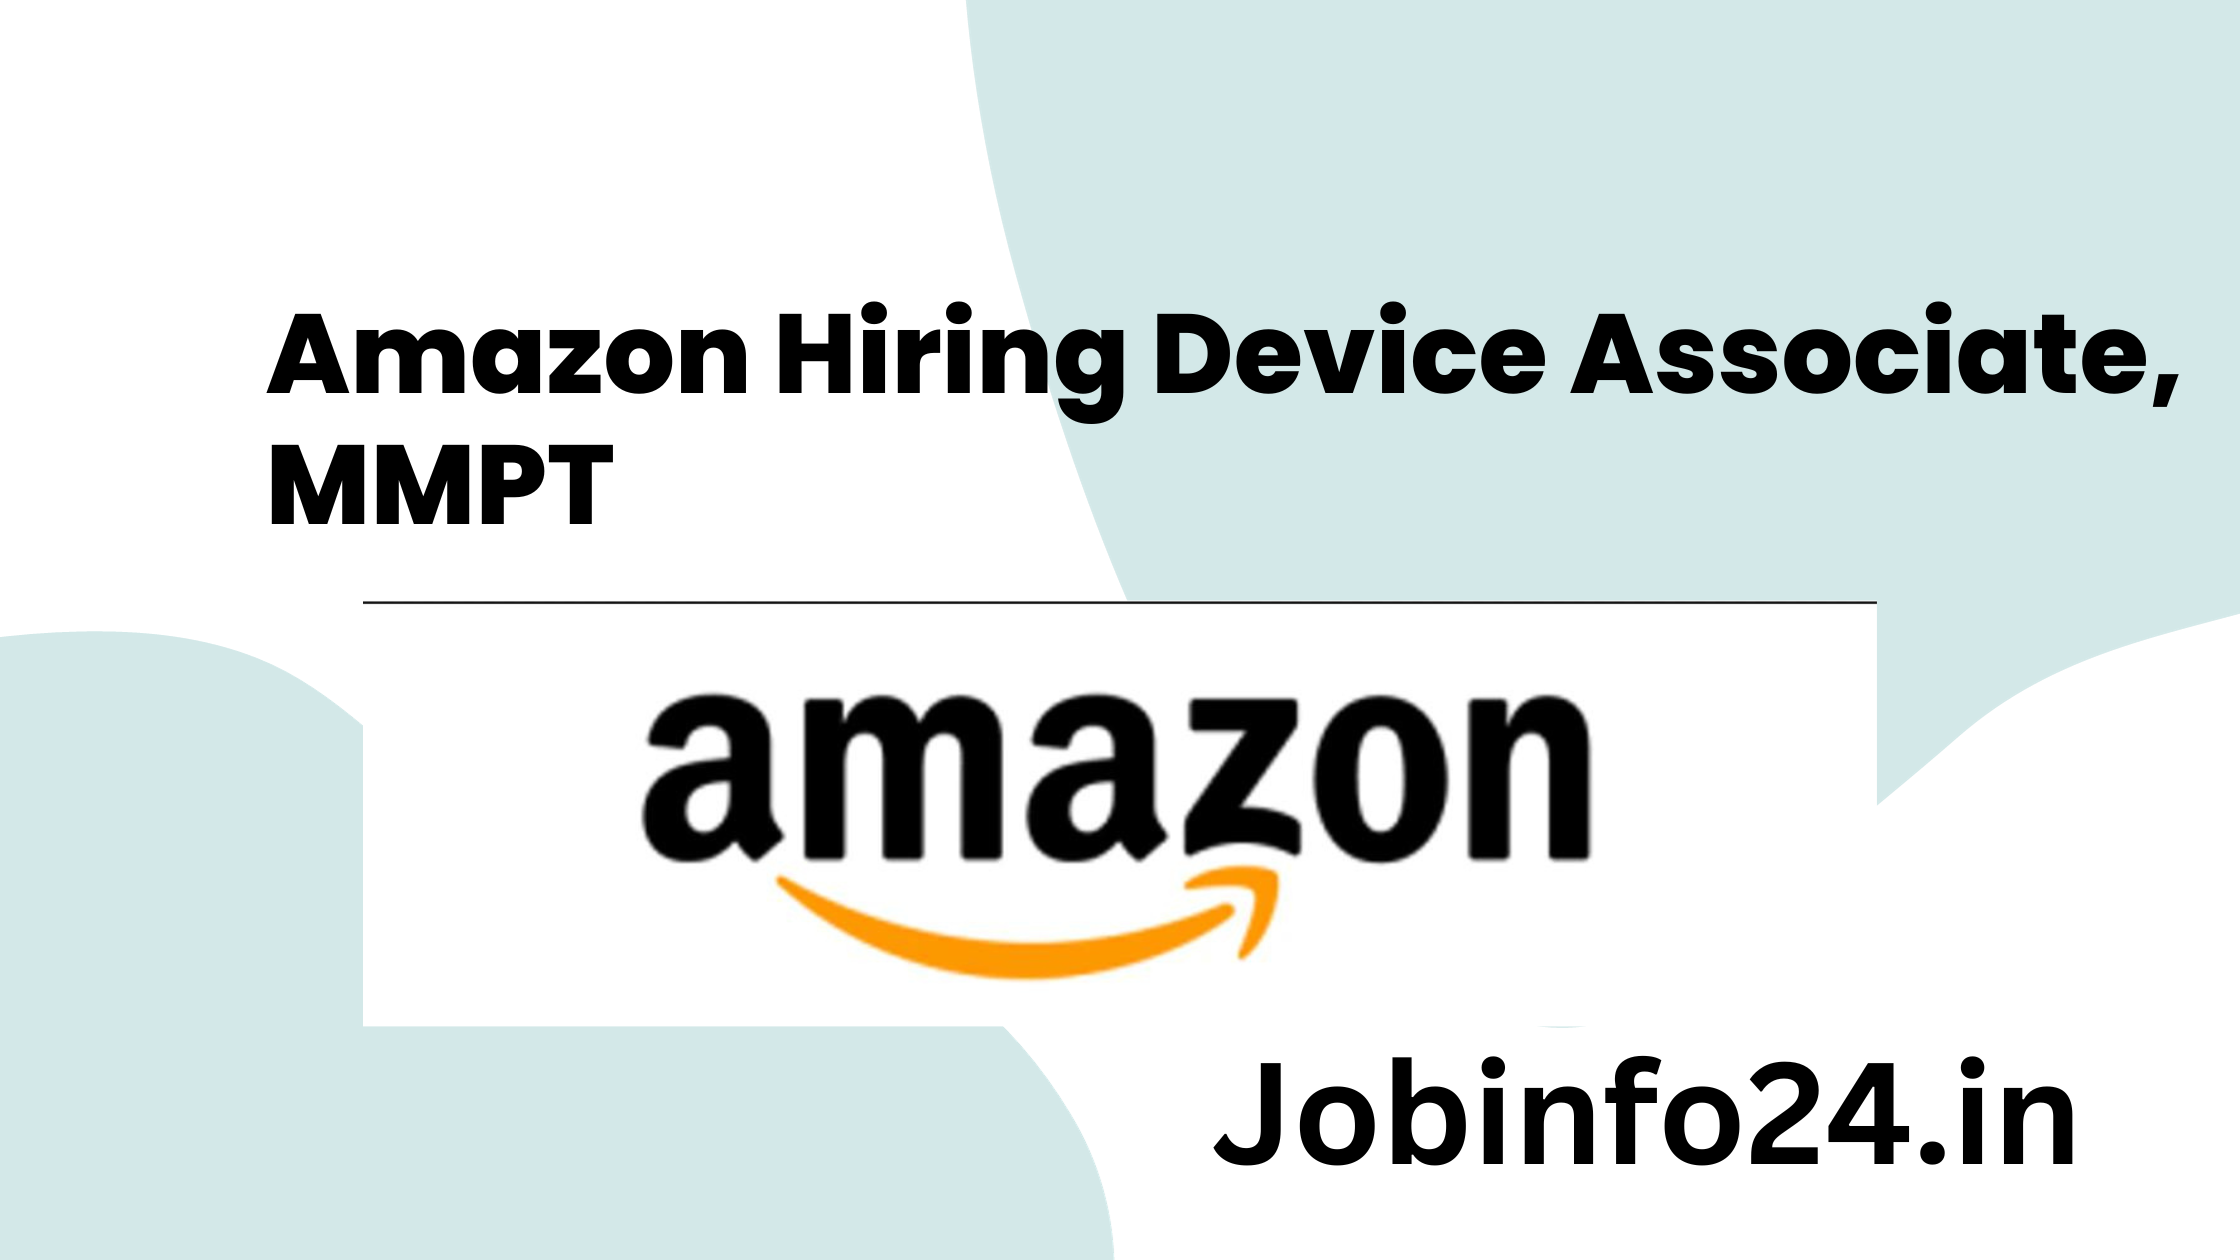 Amazon Hiring Device Associate, MMPT